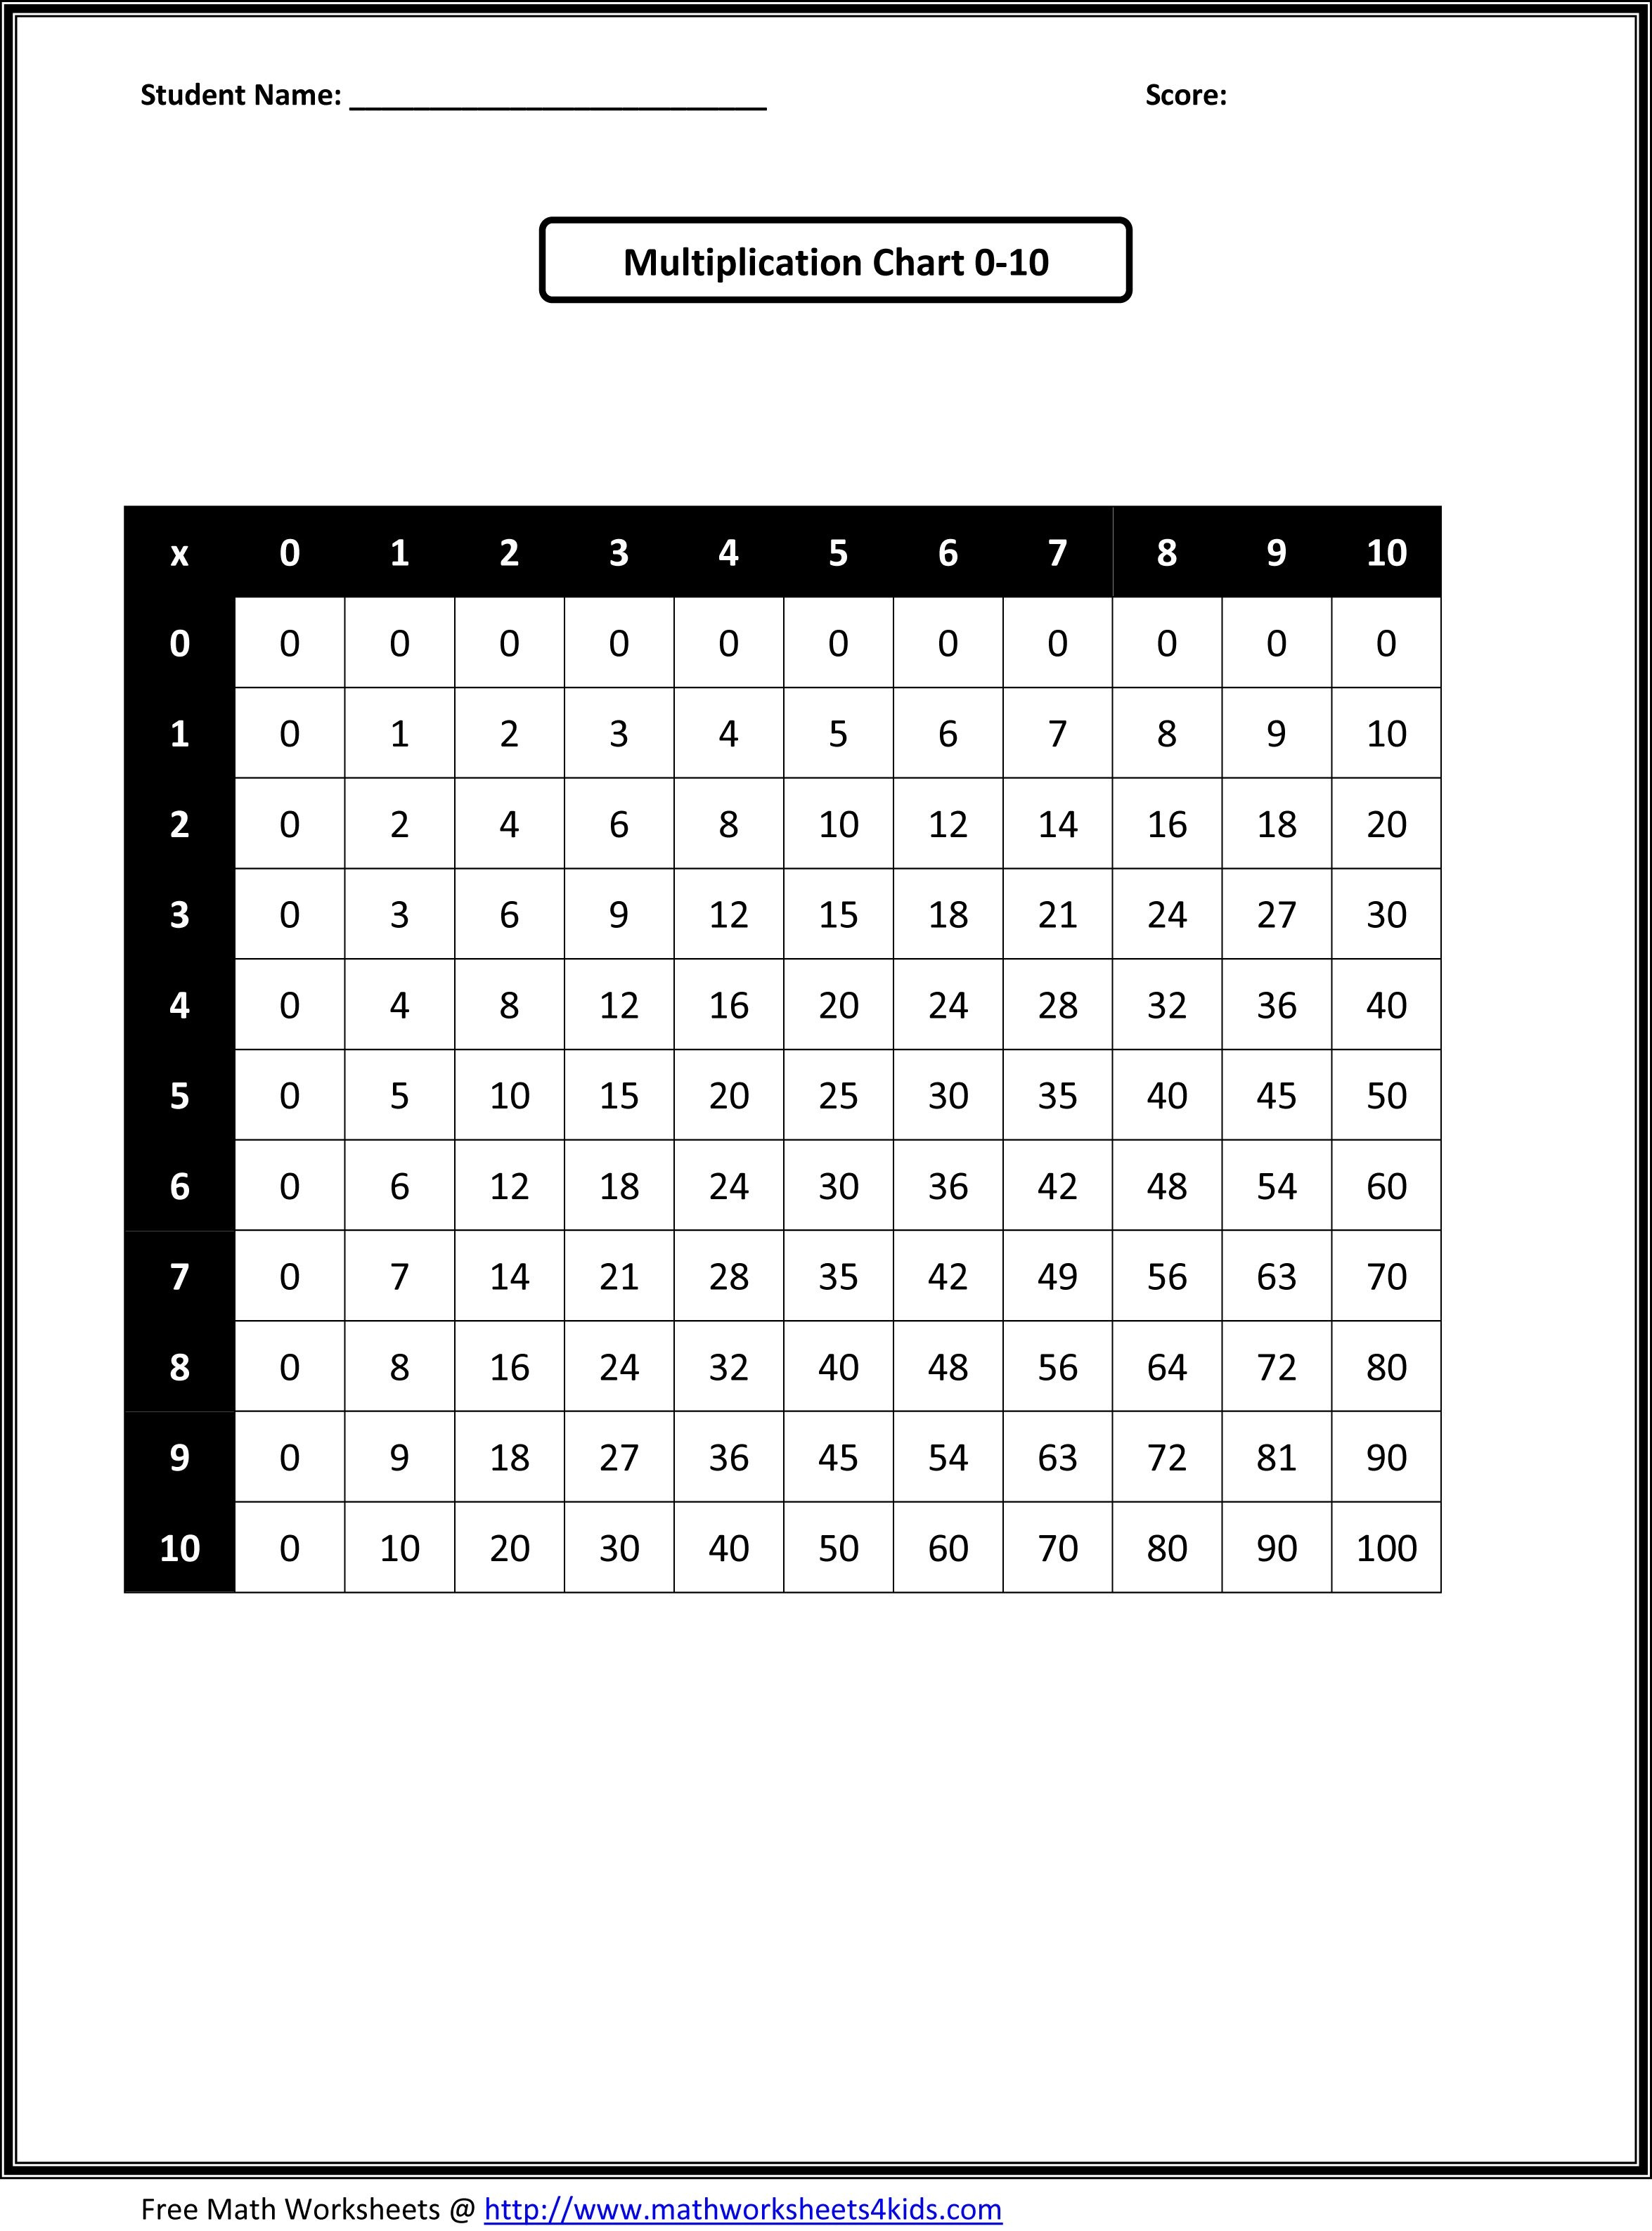 Free Printable Math Worksheets | Third Grade Math Worksheets - Free Printable Common Core Math Worksheets For Third Grade